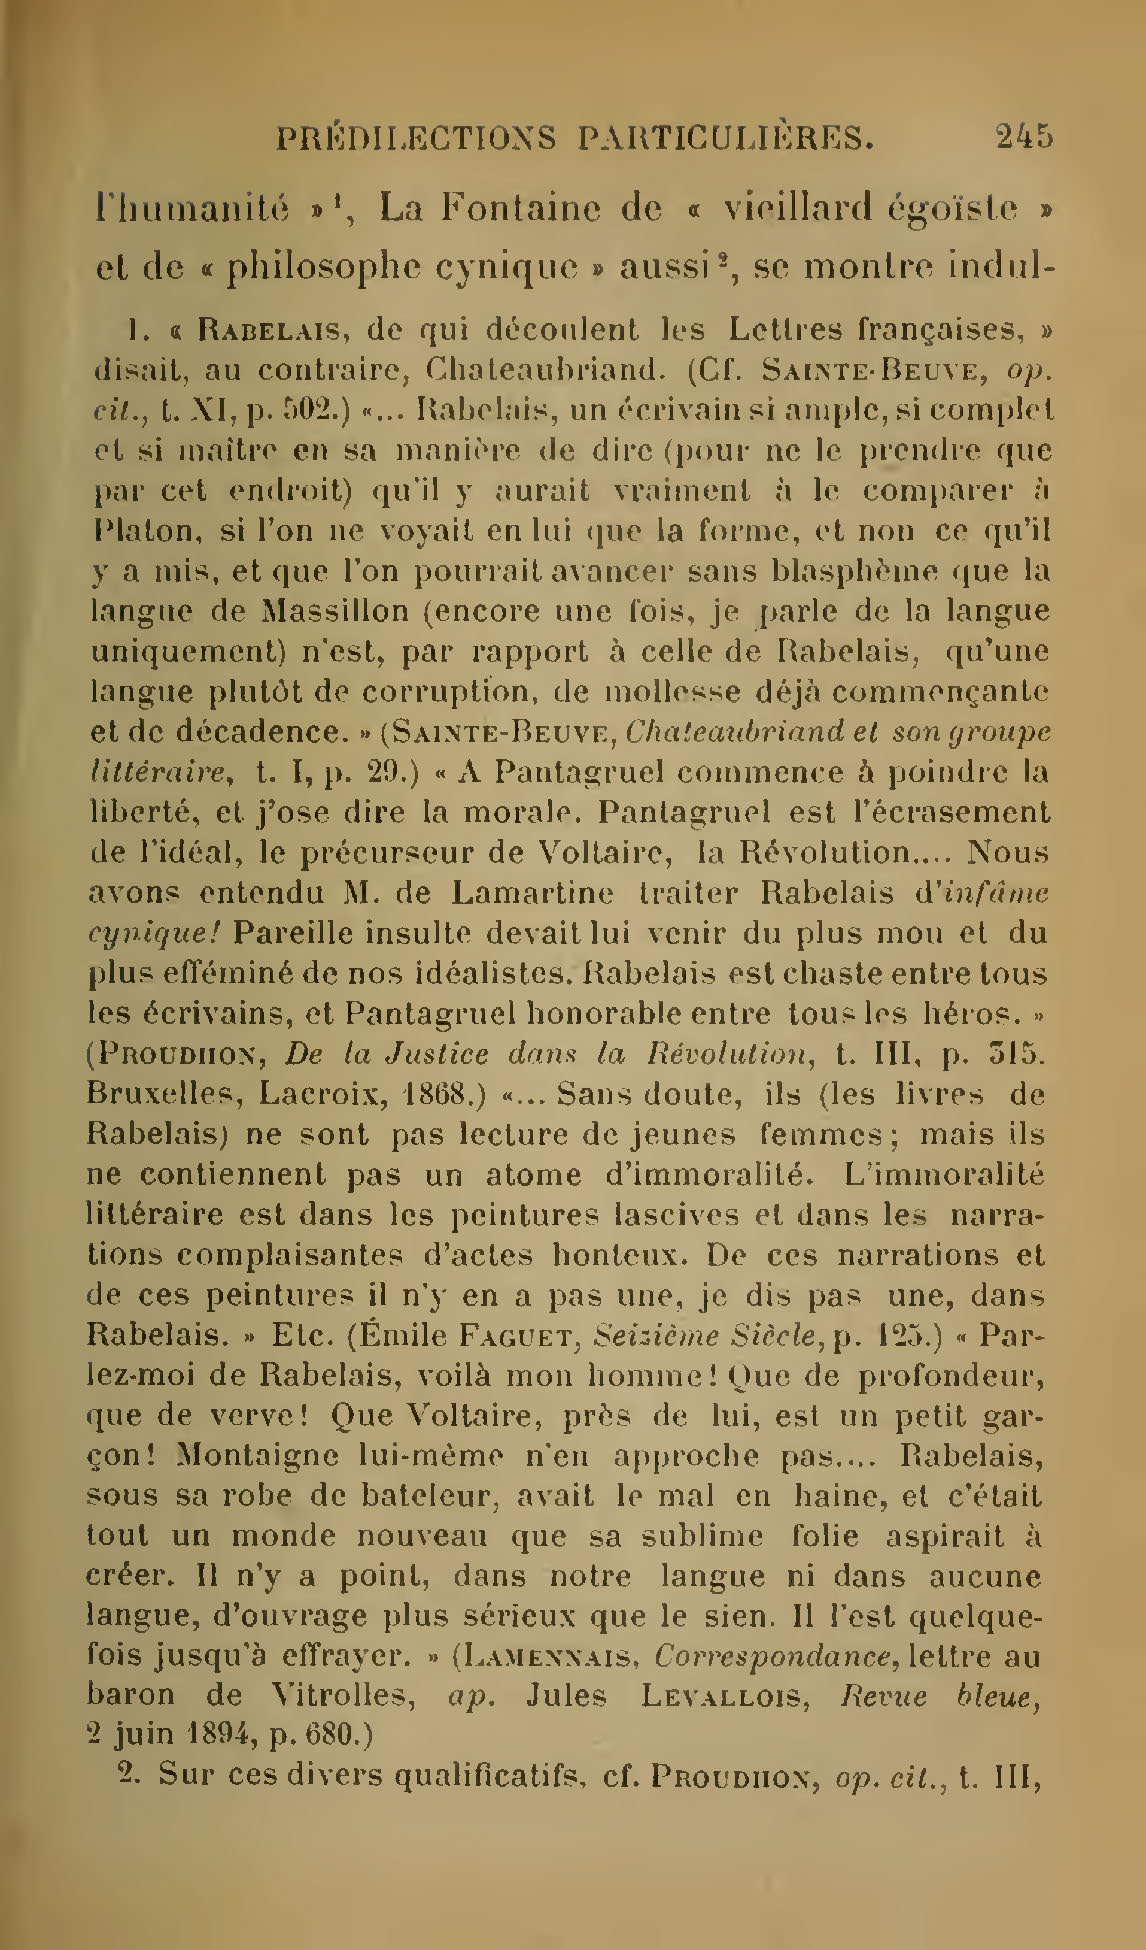 Albert Cim, Le Livre, t. I, p. 245.